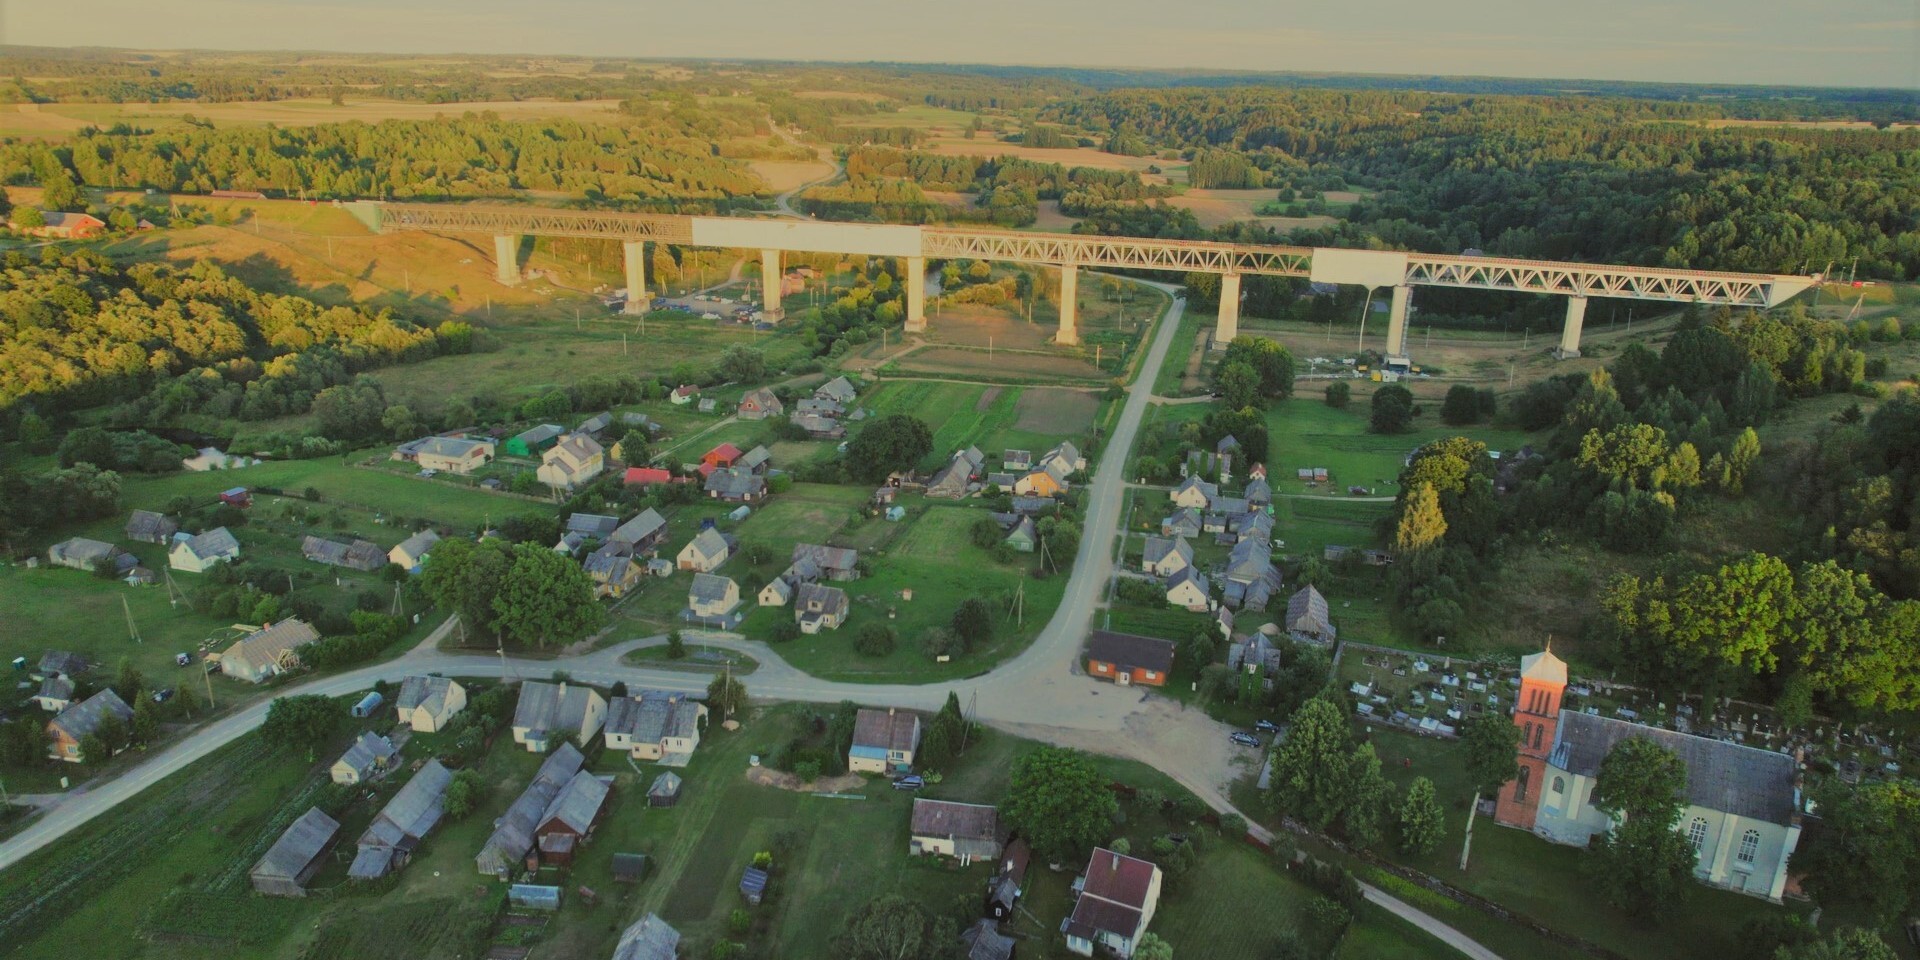 Lyduvėnai Bridge in Lithuania